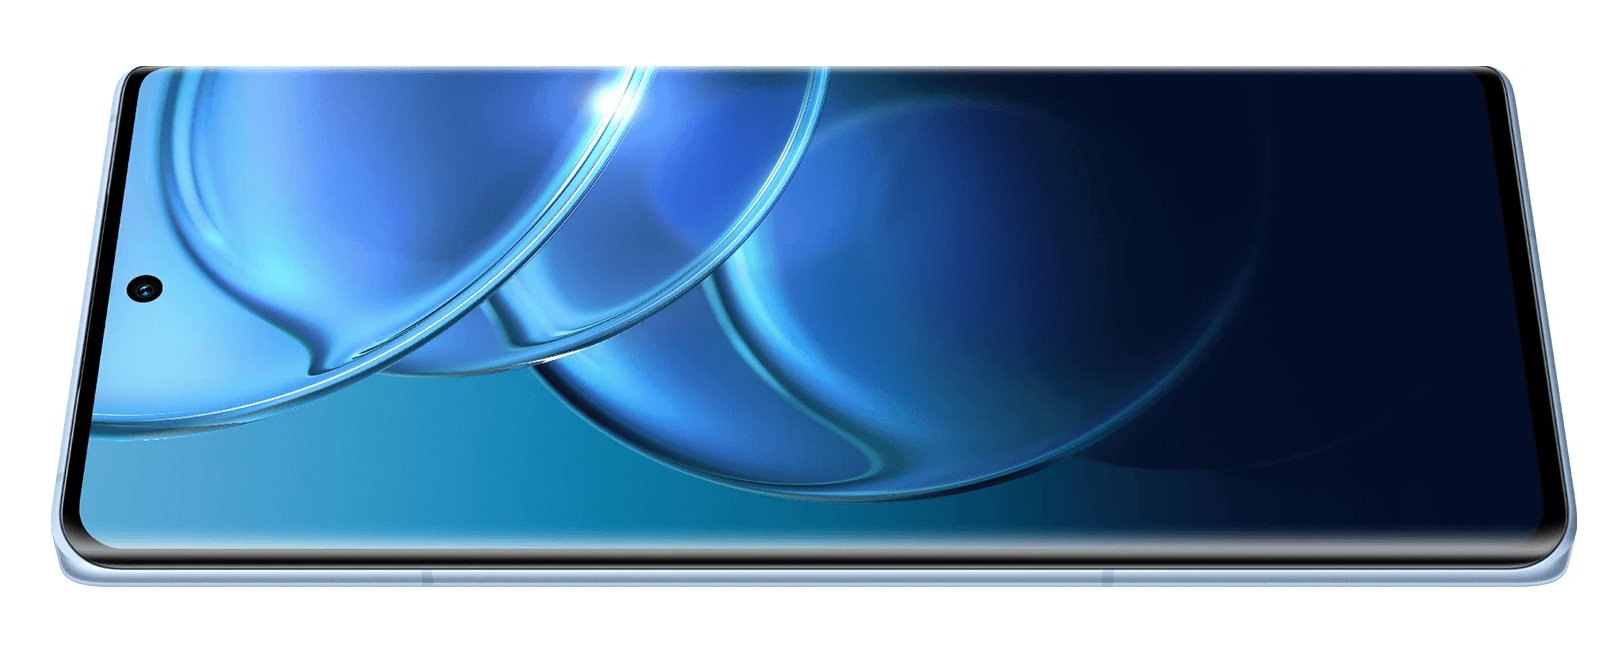 vivo X90的藍光曲面螢幕能顯示高達 10.7 億色彩